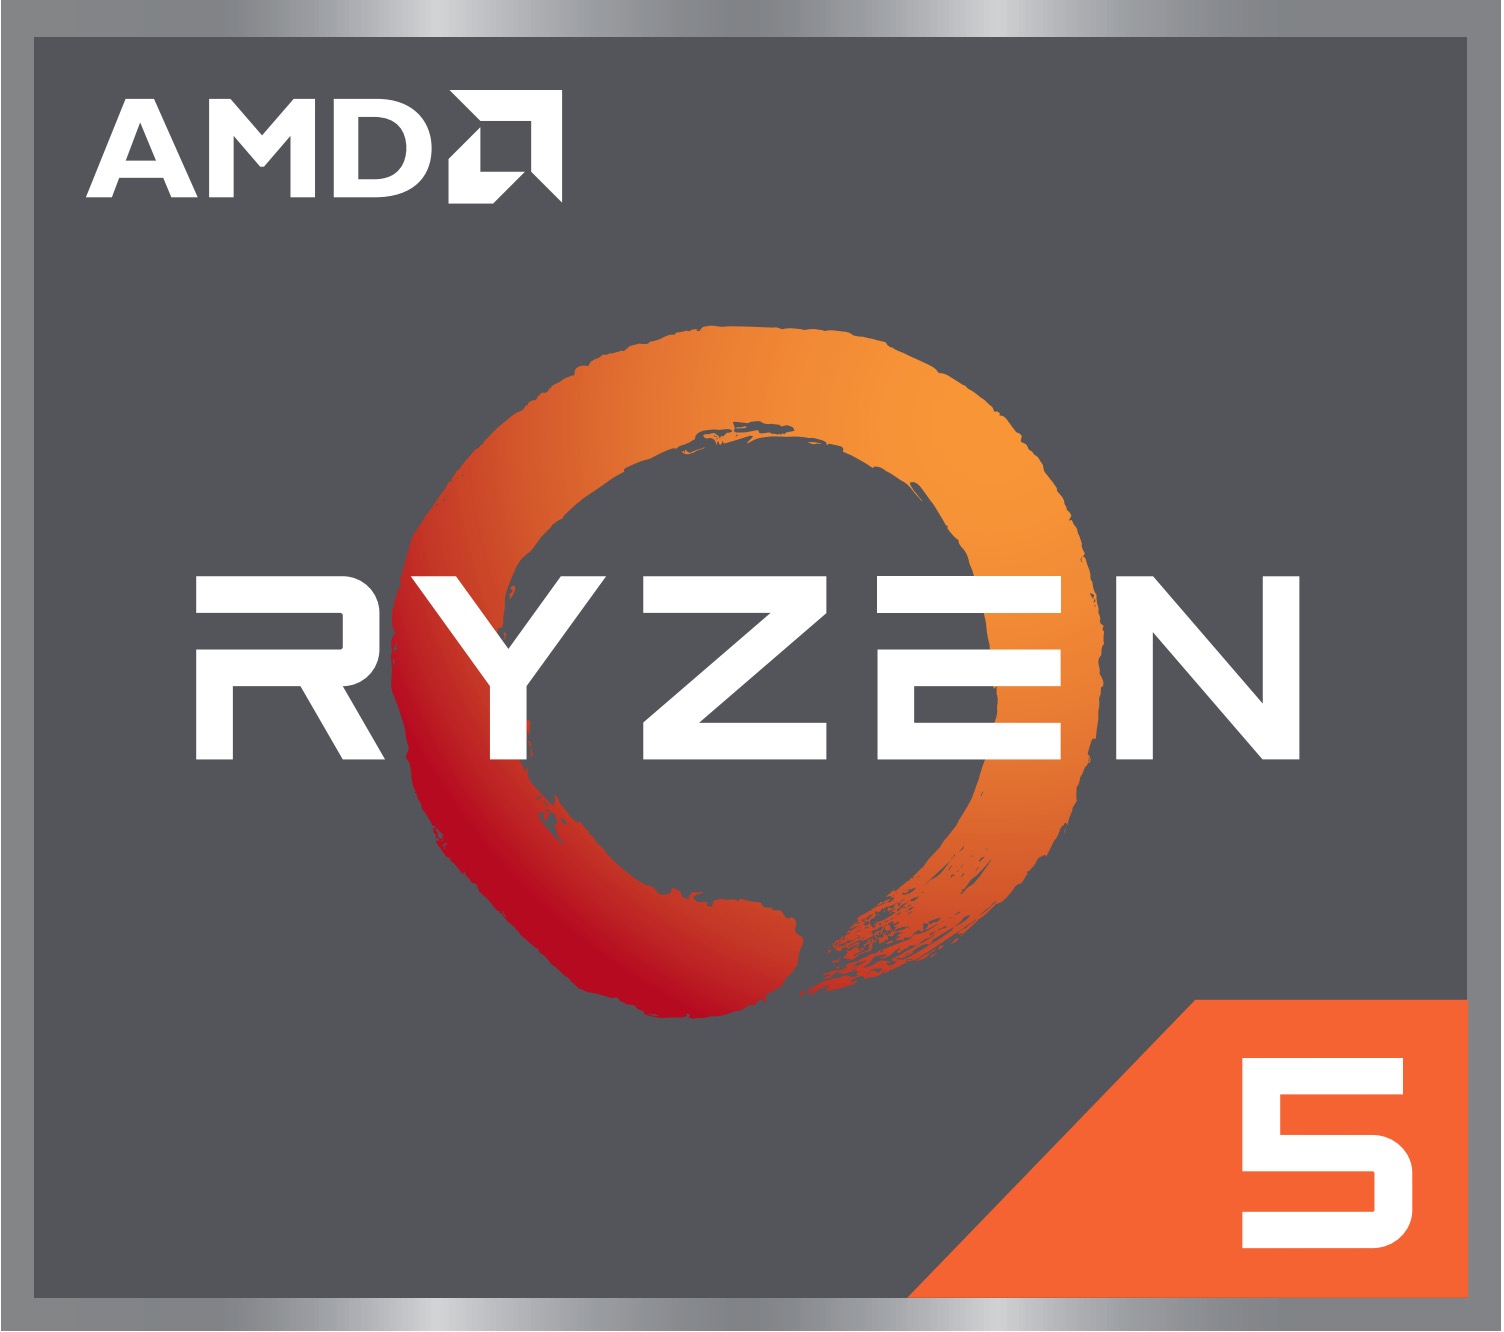 AMD Ryzen 5 3500U Processor - NotebookCheck.net Tech